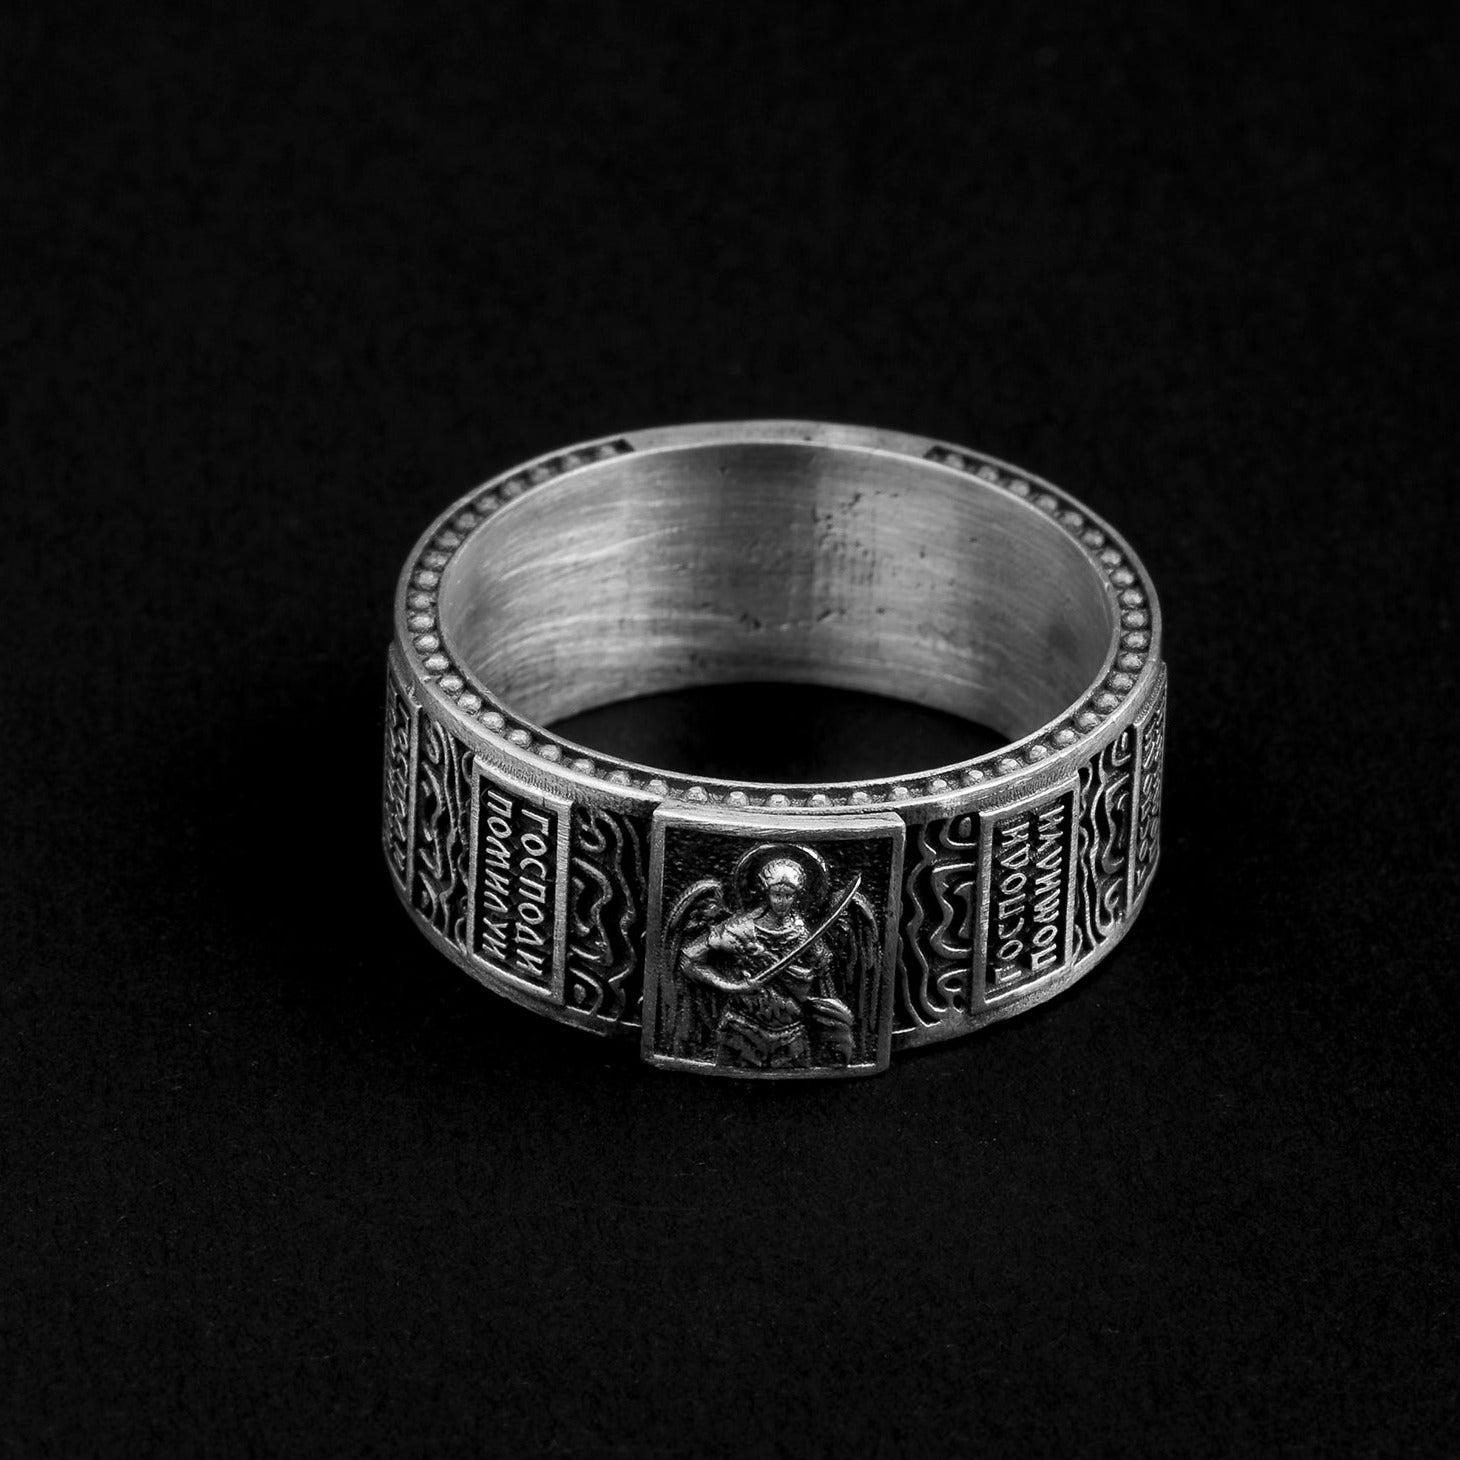 handmade sterling silver Saint Archangel Signet Ring